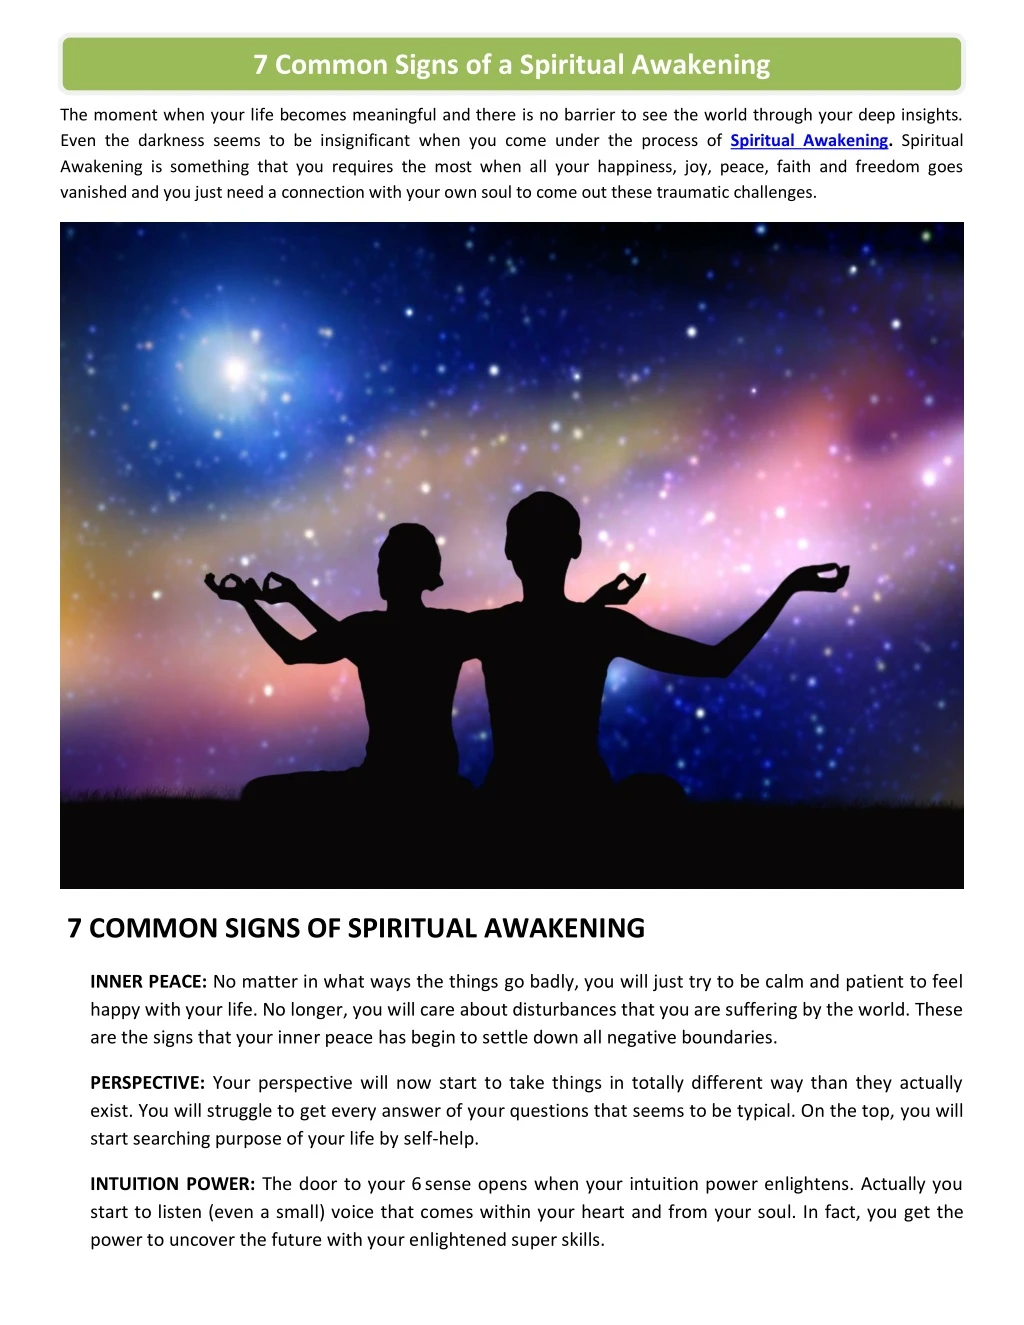 7 common signs of a spiritual awakening